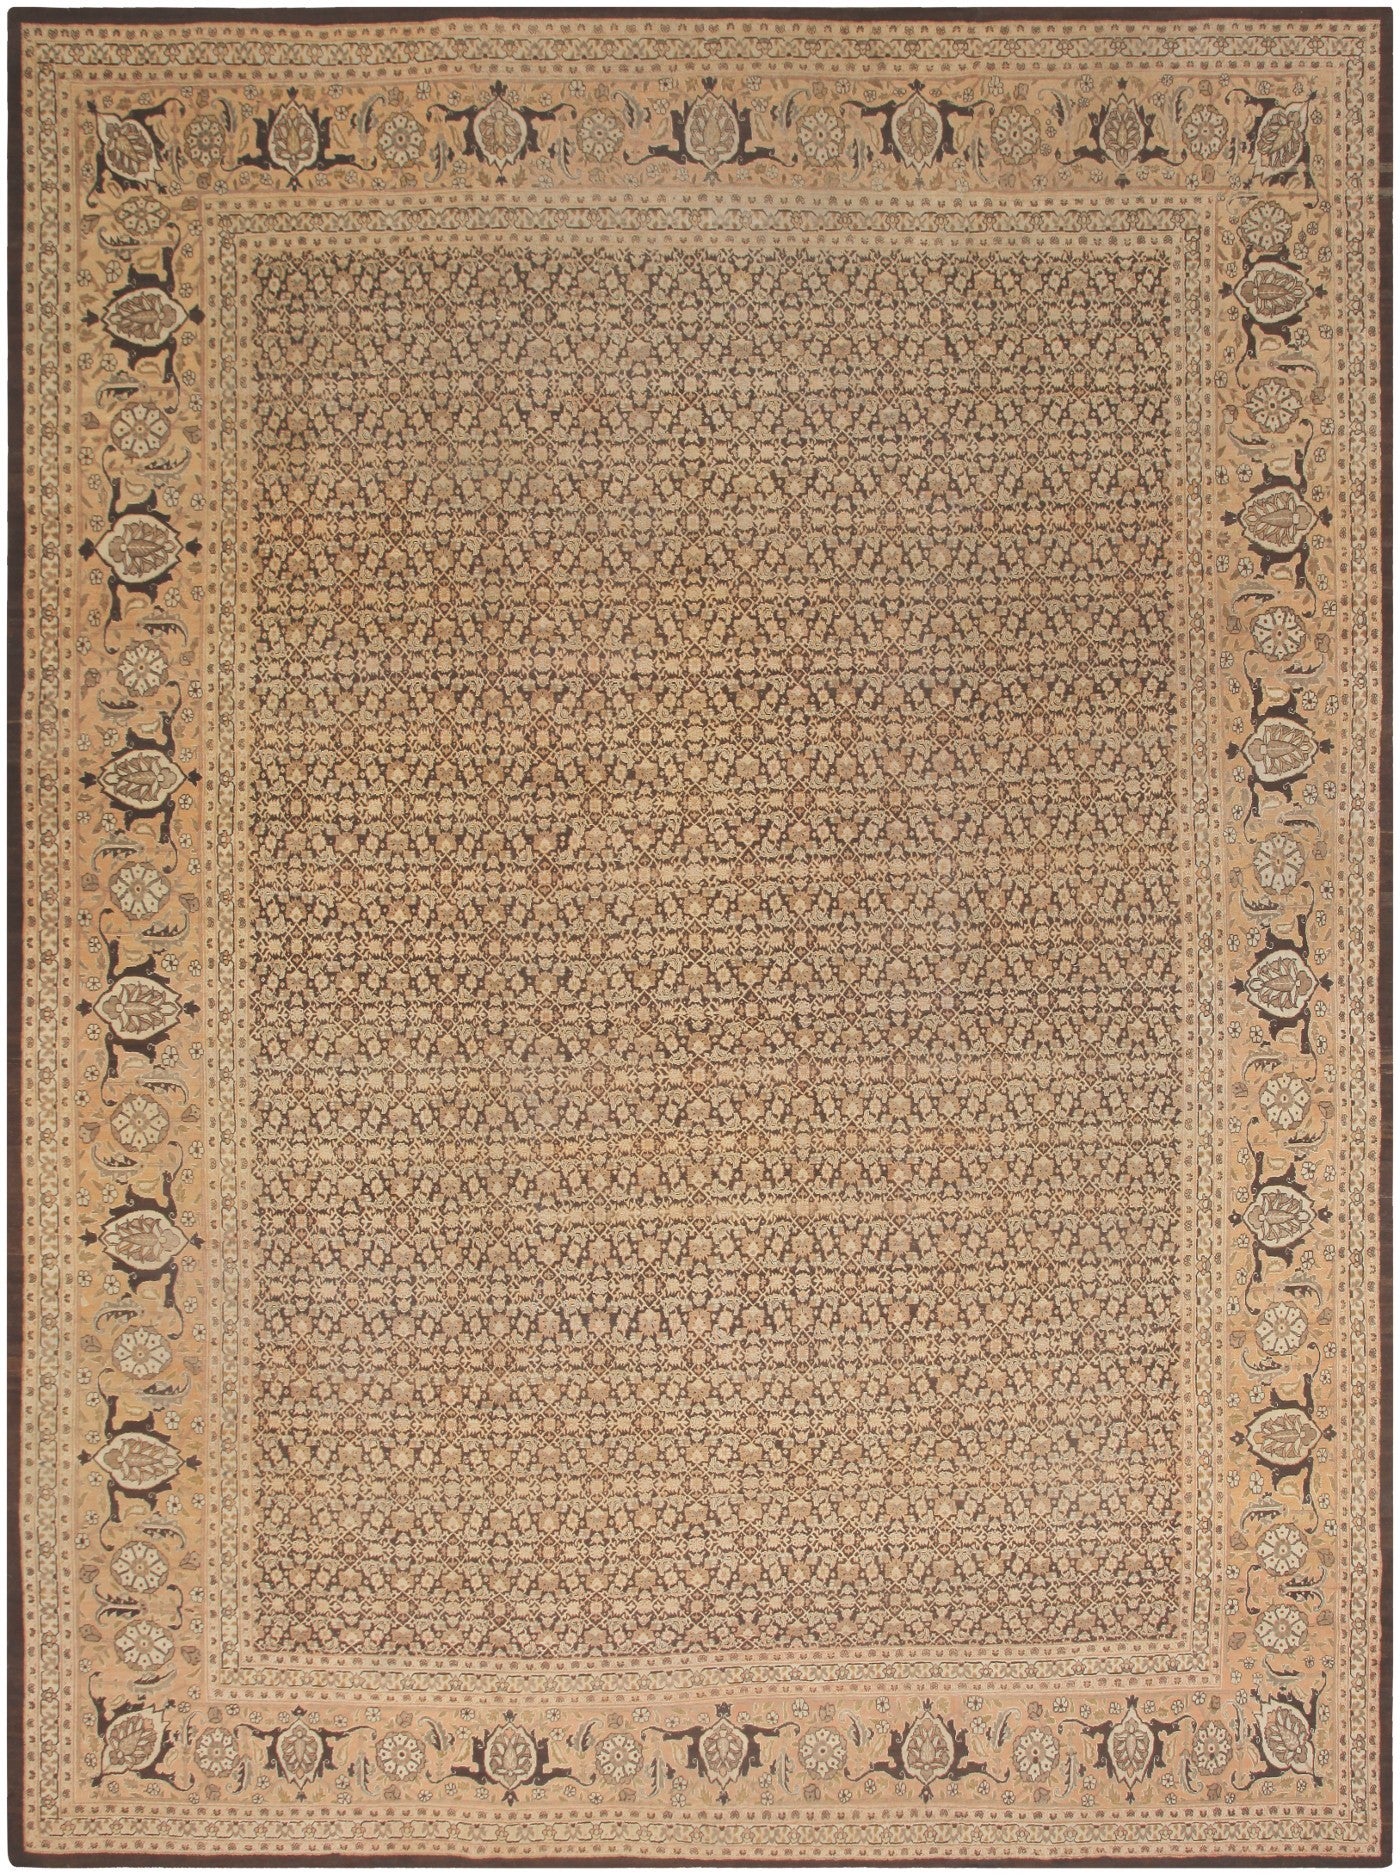 Rare Brown Background Antique Persian Tabriz Rug